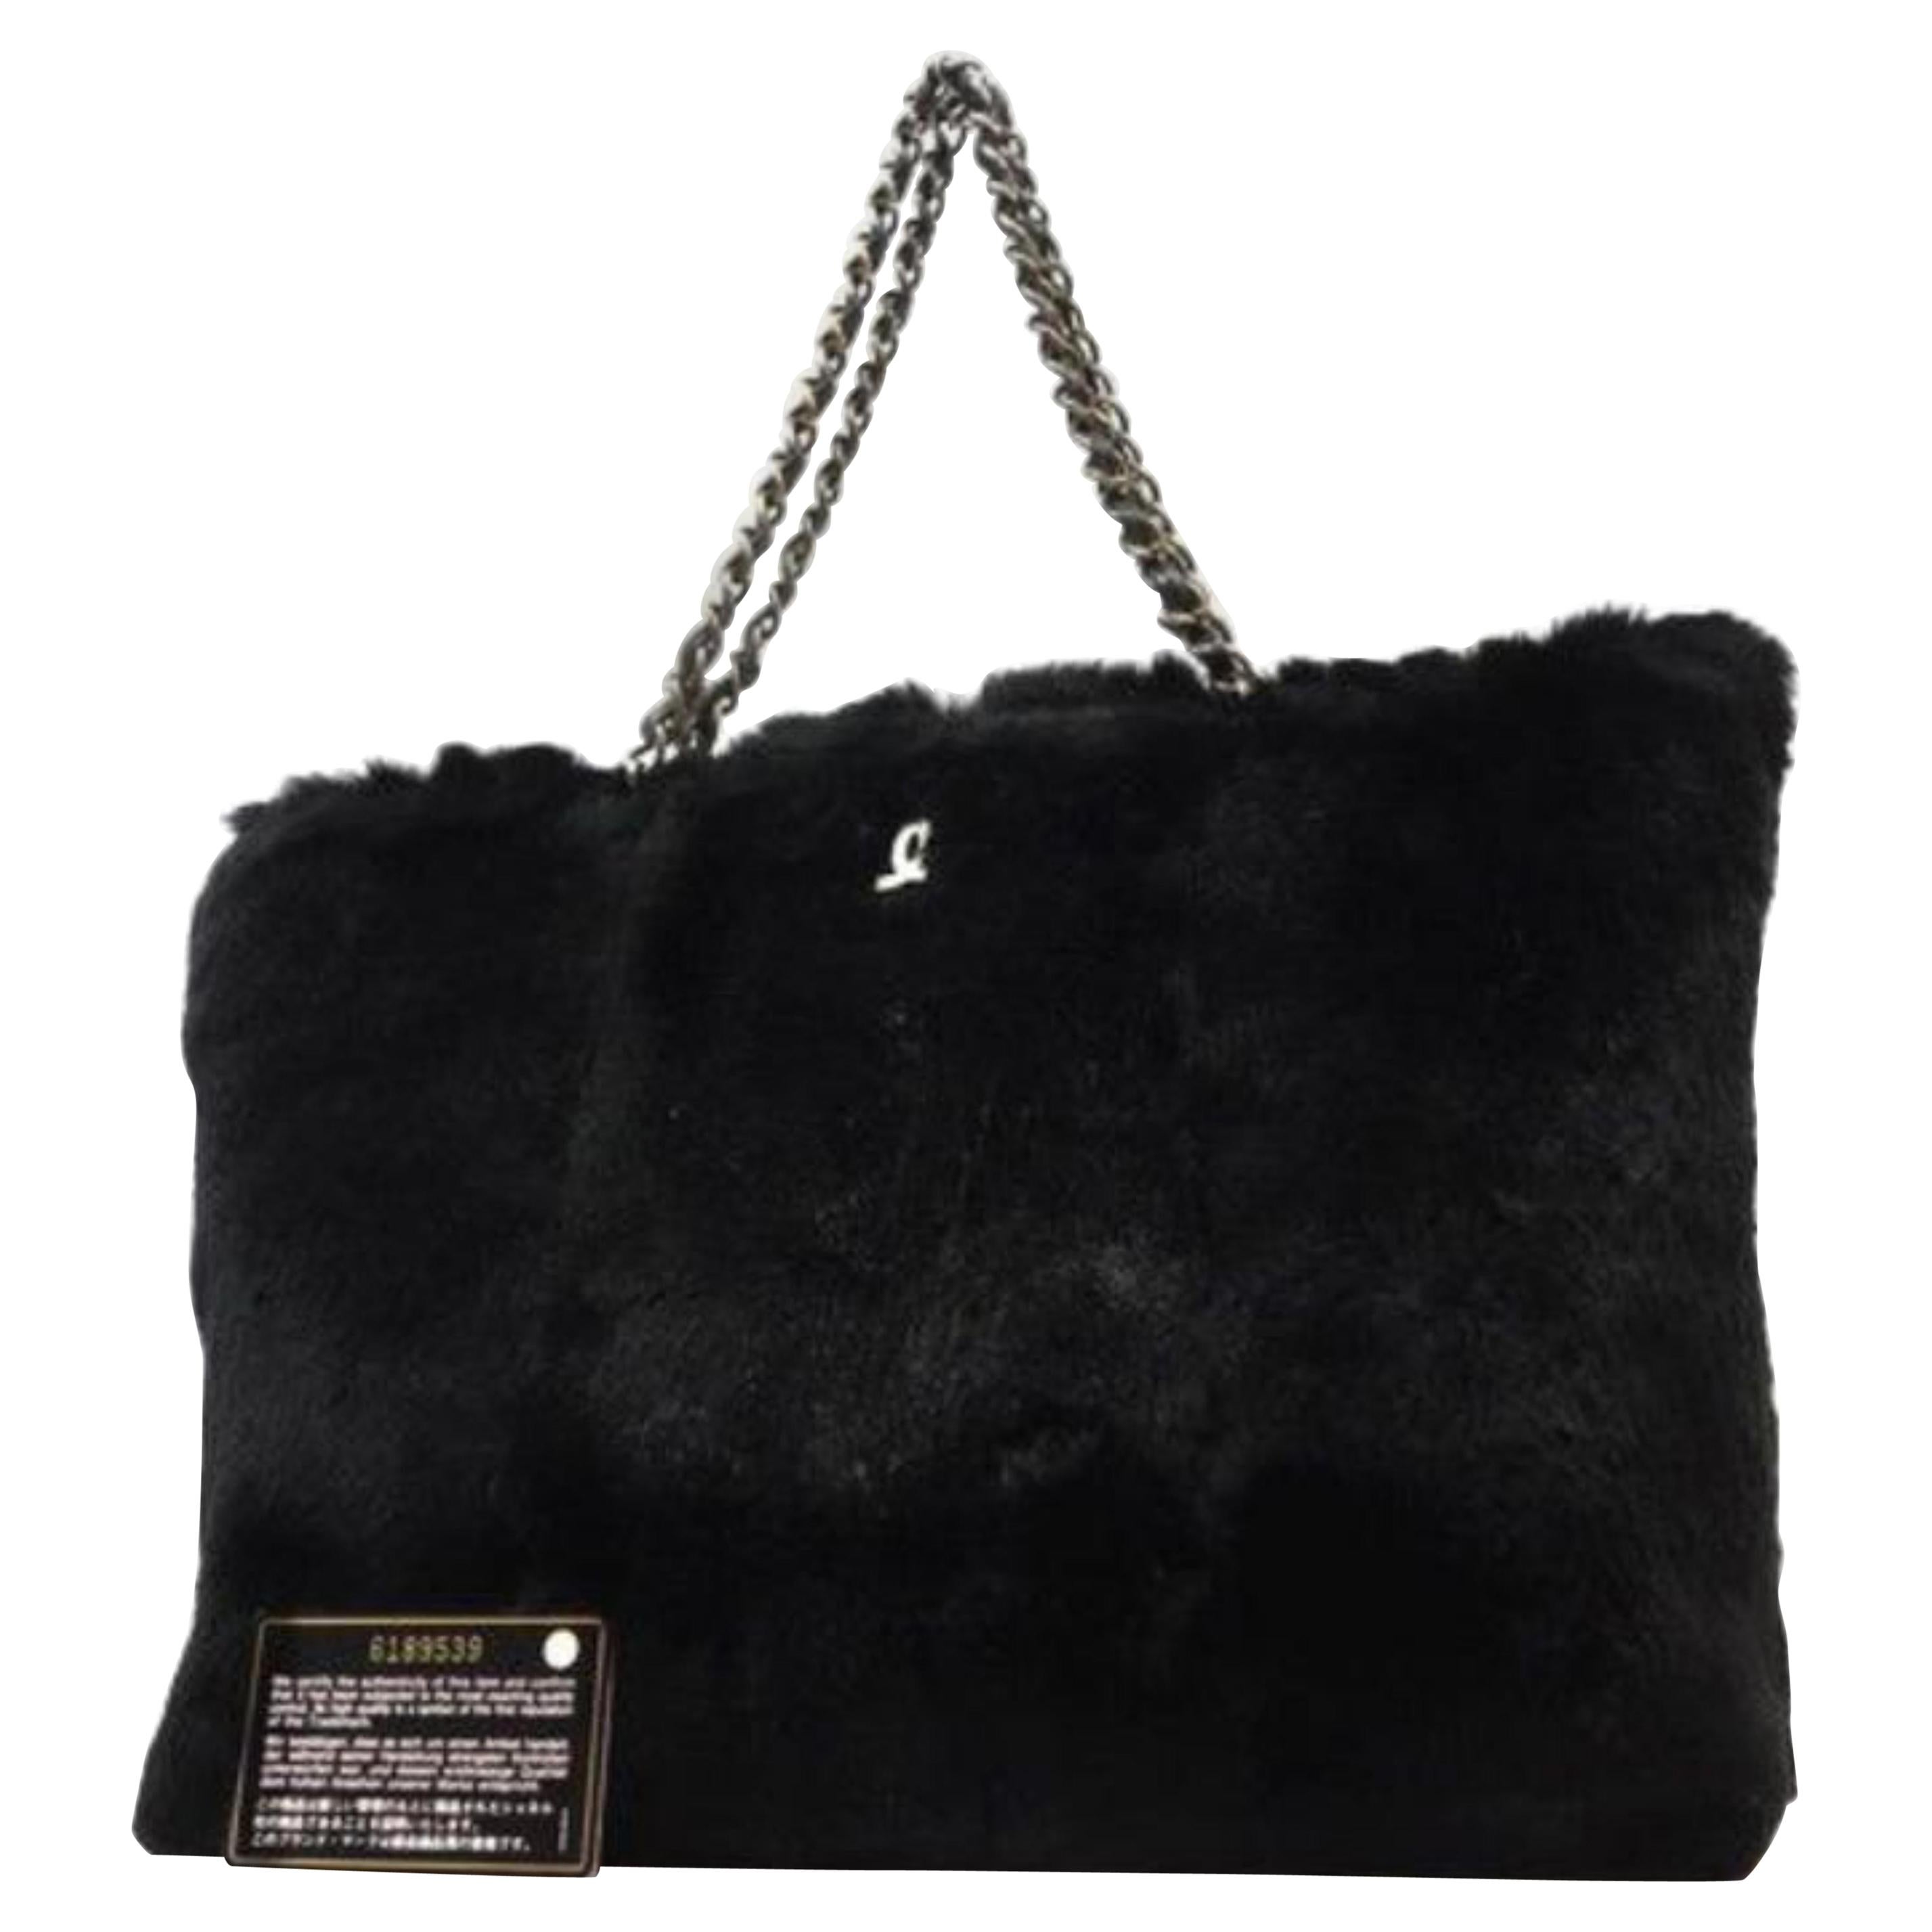 Chanel Cc Chain Tote 227177 Black Rabbit Fur Shoulder Bag For Sale